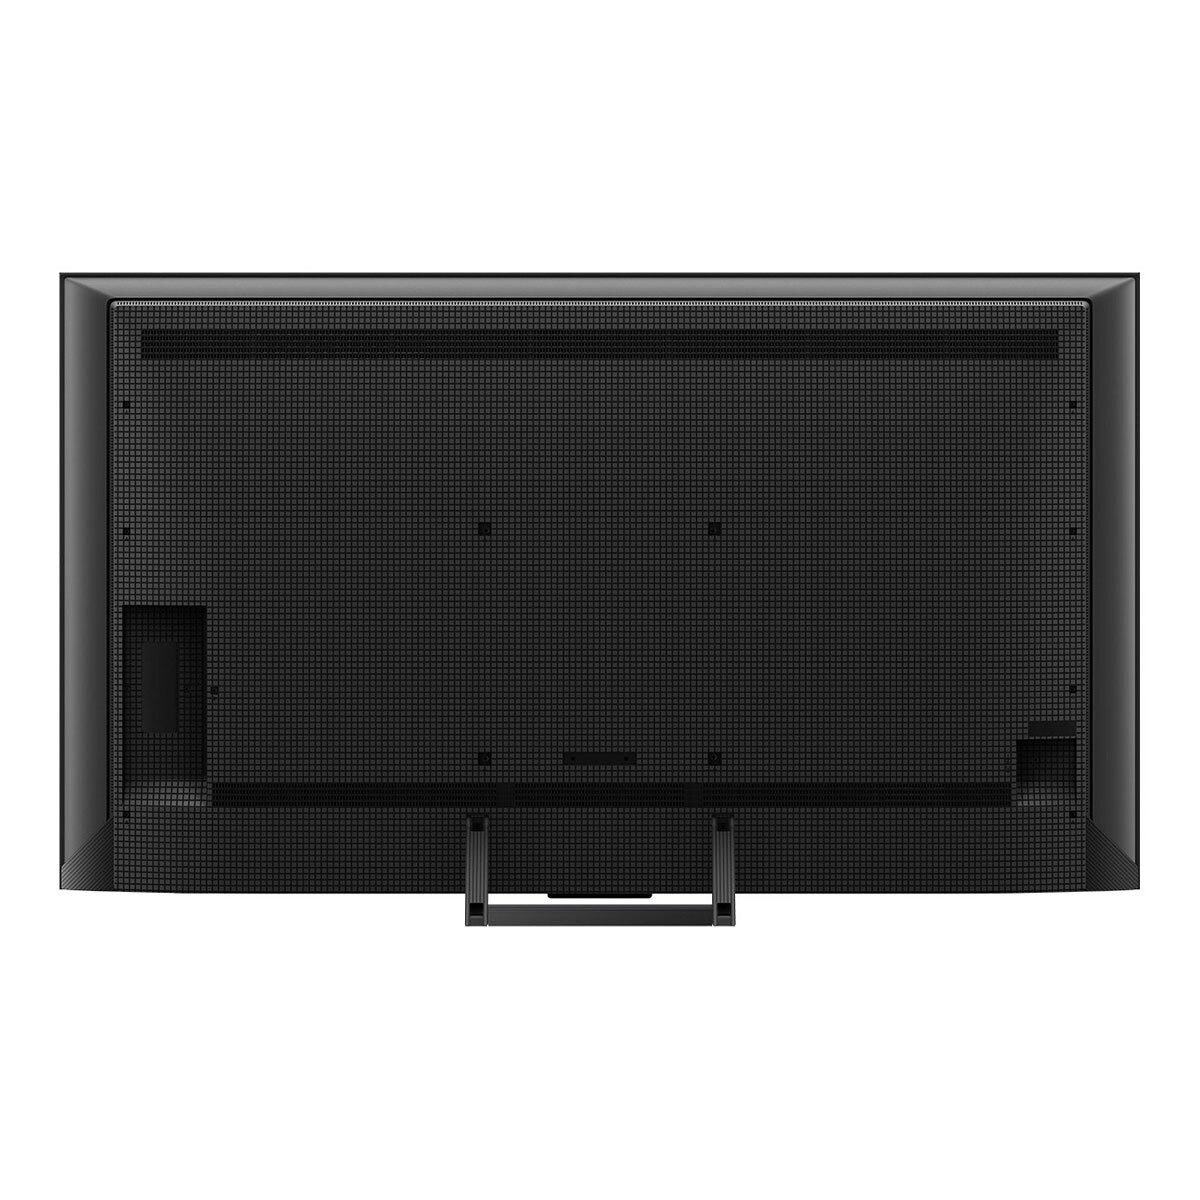 TCL 65吋 4K QLED Google TV 量子智能連網液晶顯示器 65C745